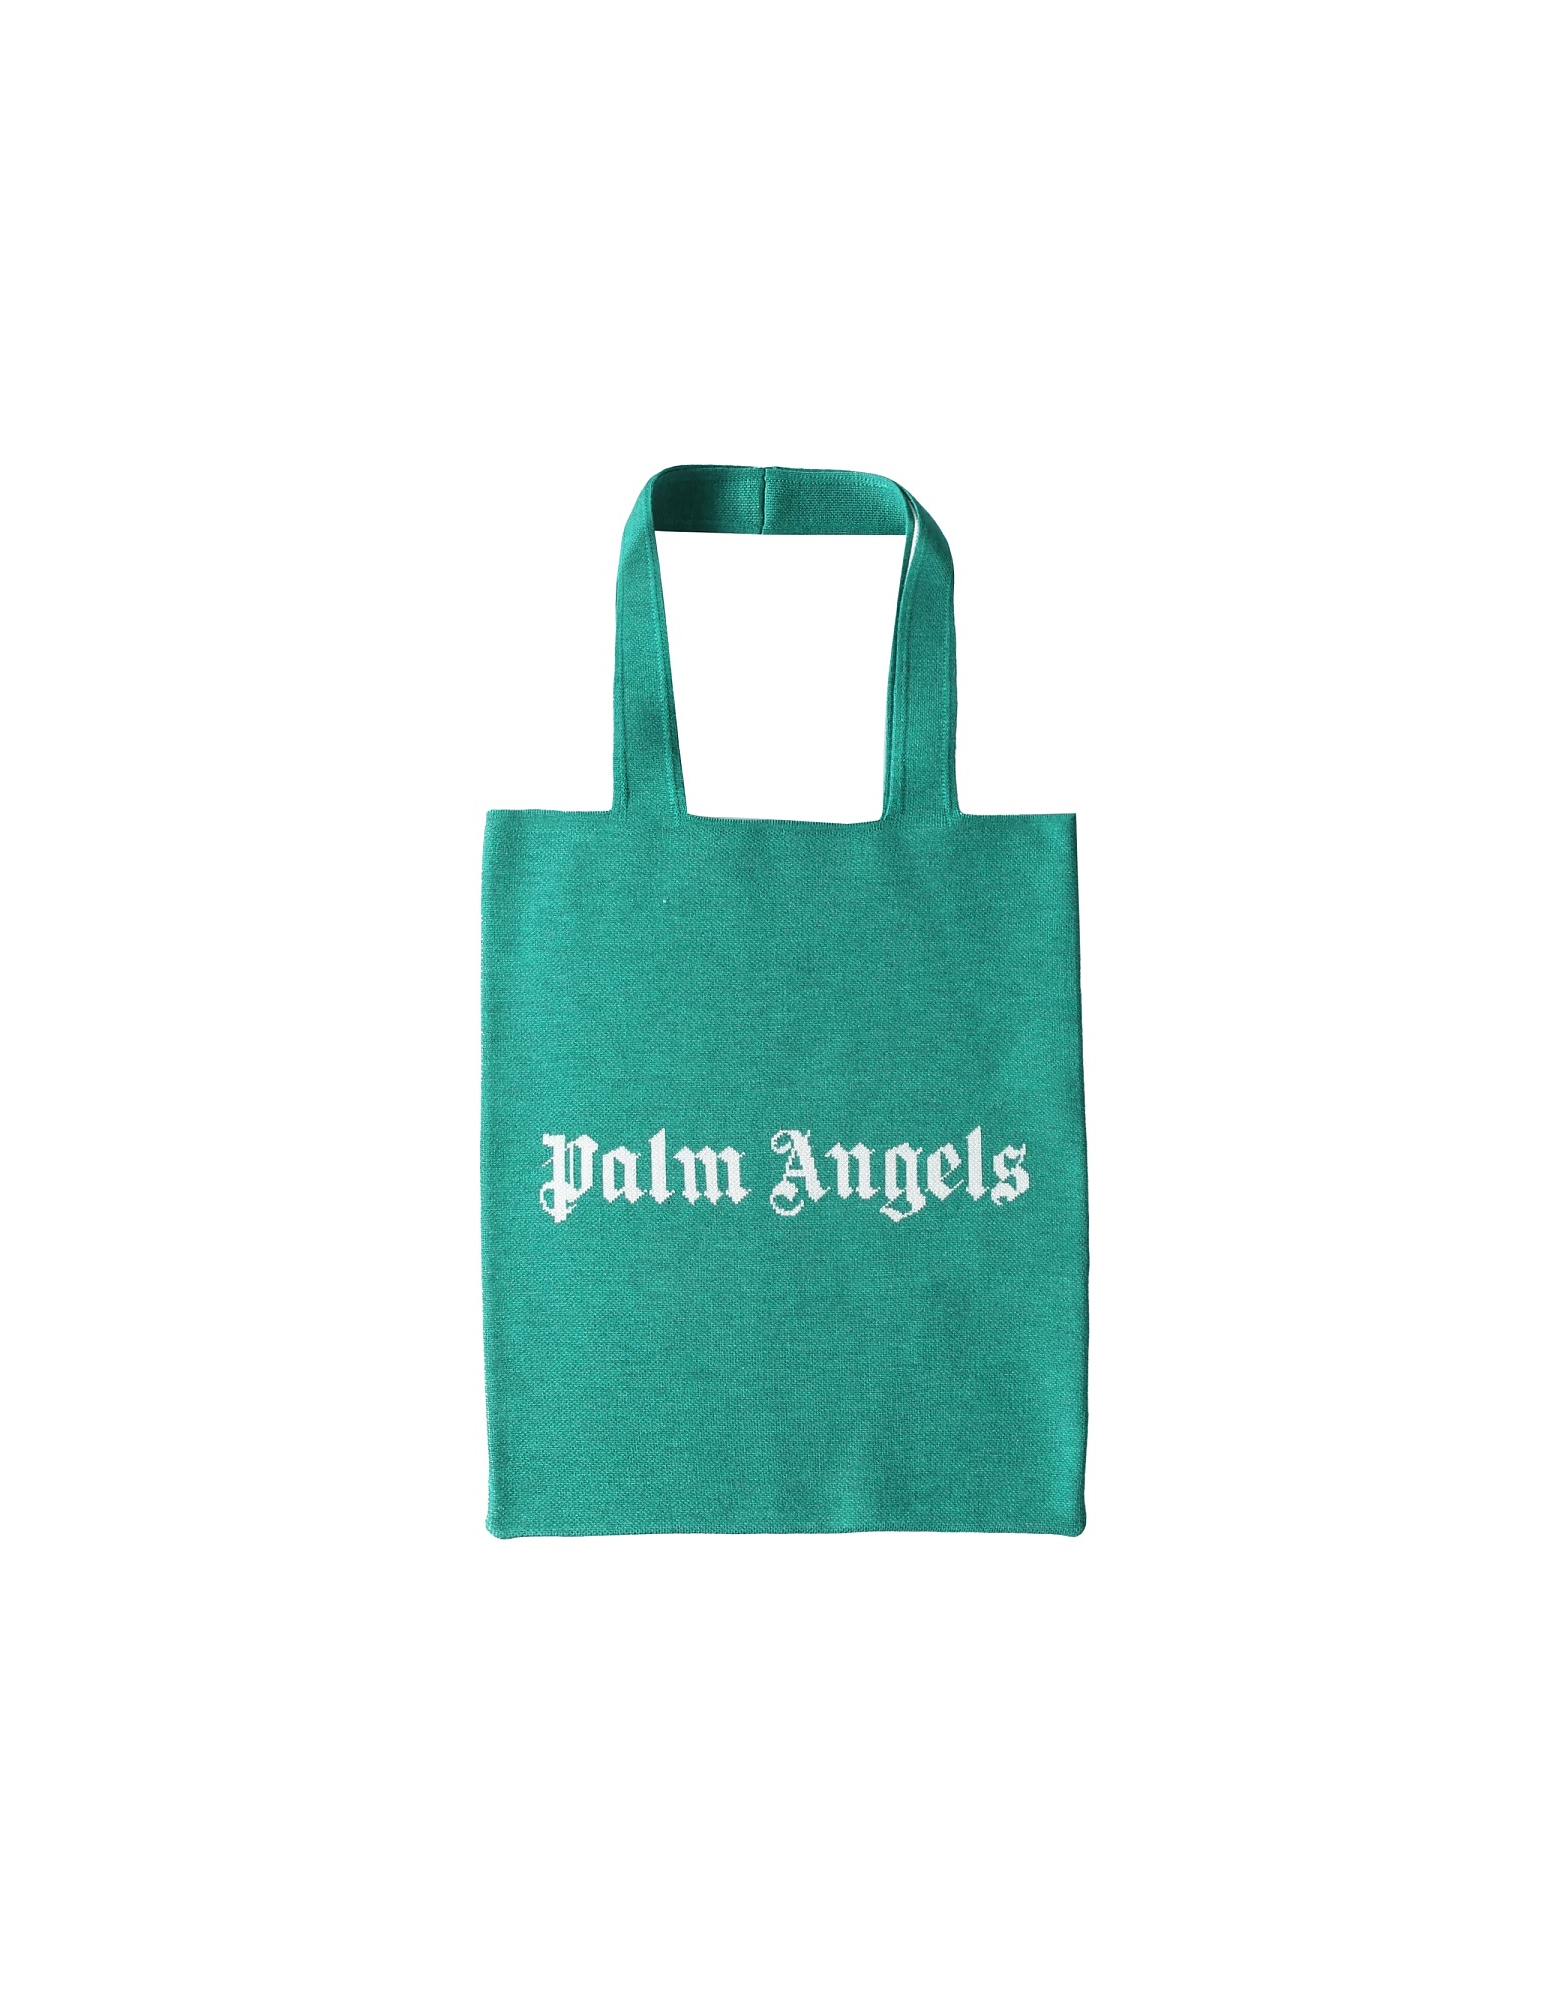 PALM ANGELS DESIGNER MEN'S BAGS LOGO SHOPPER BAG